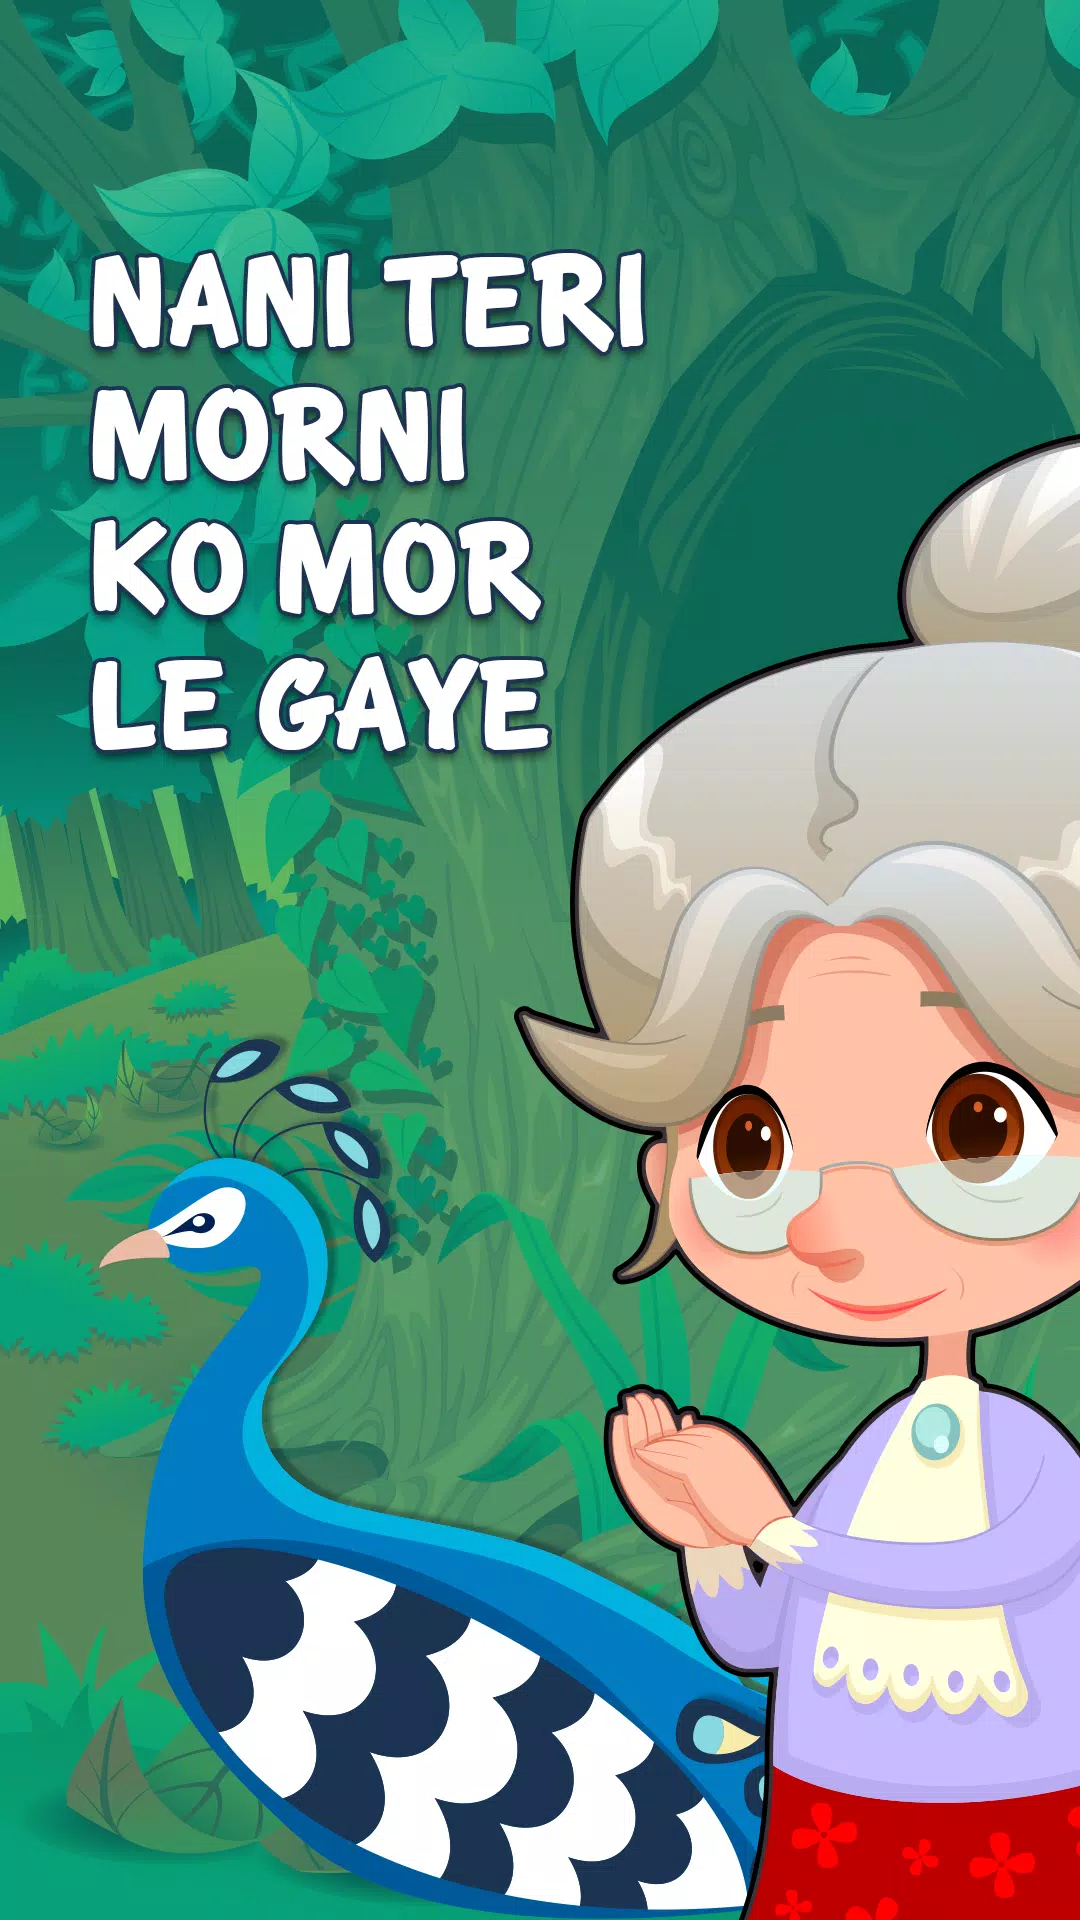 Nani Teri Morni Ko Mor Le Gaye - Hindi Poem APK for Android Download